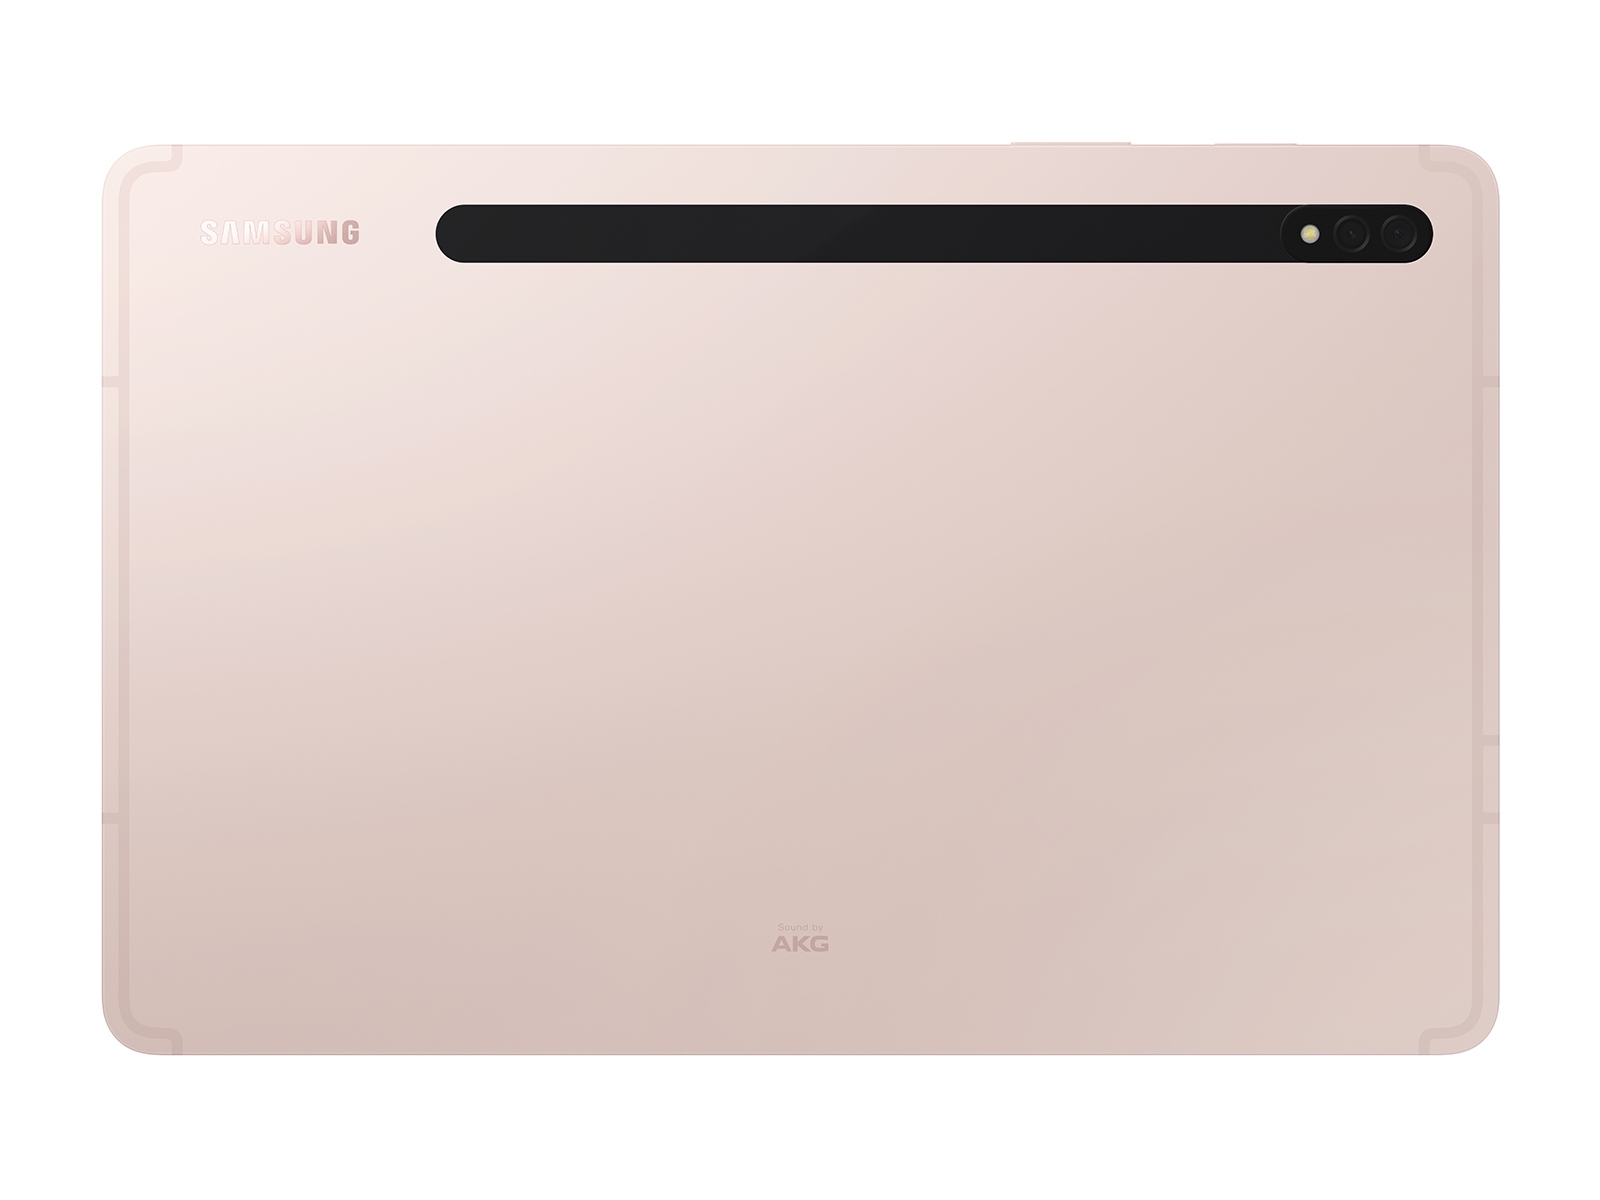 Thumbnail image of Galaxy Tab S8, 128GB, Pink Gold (Wi-Fi)